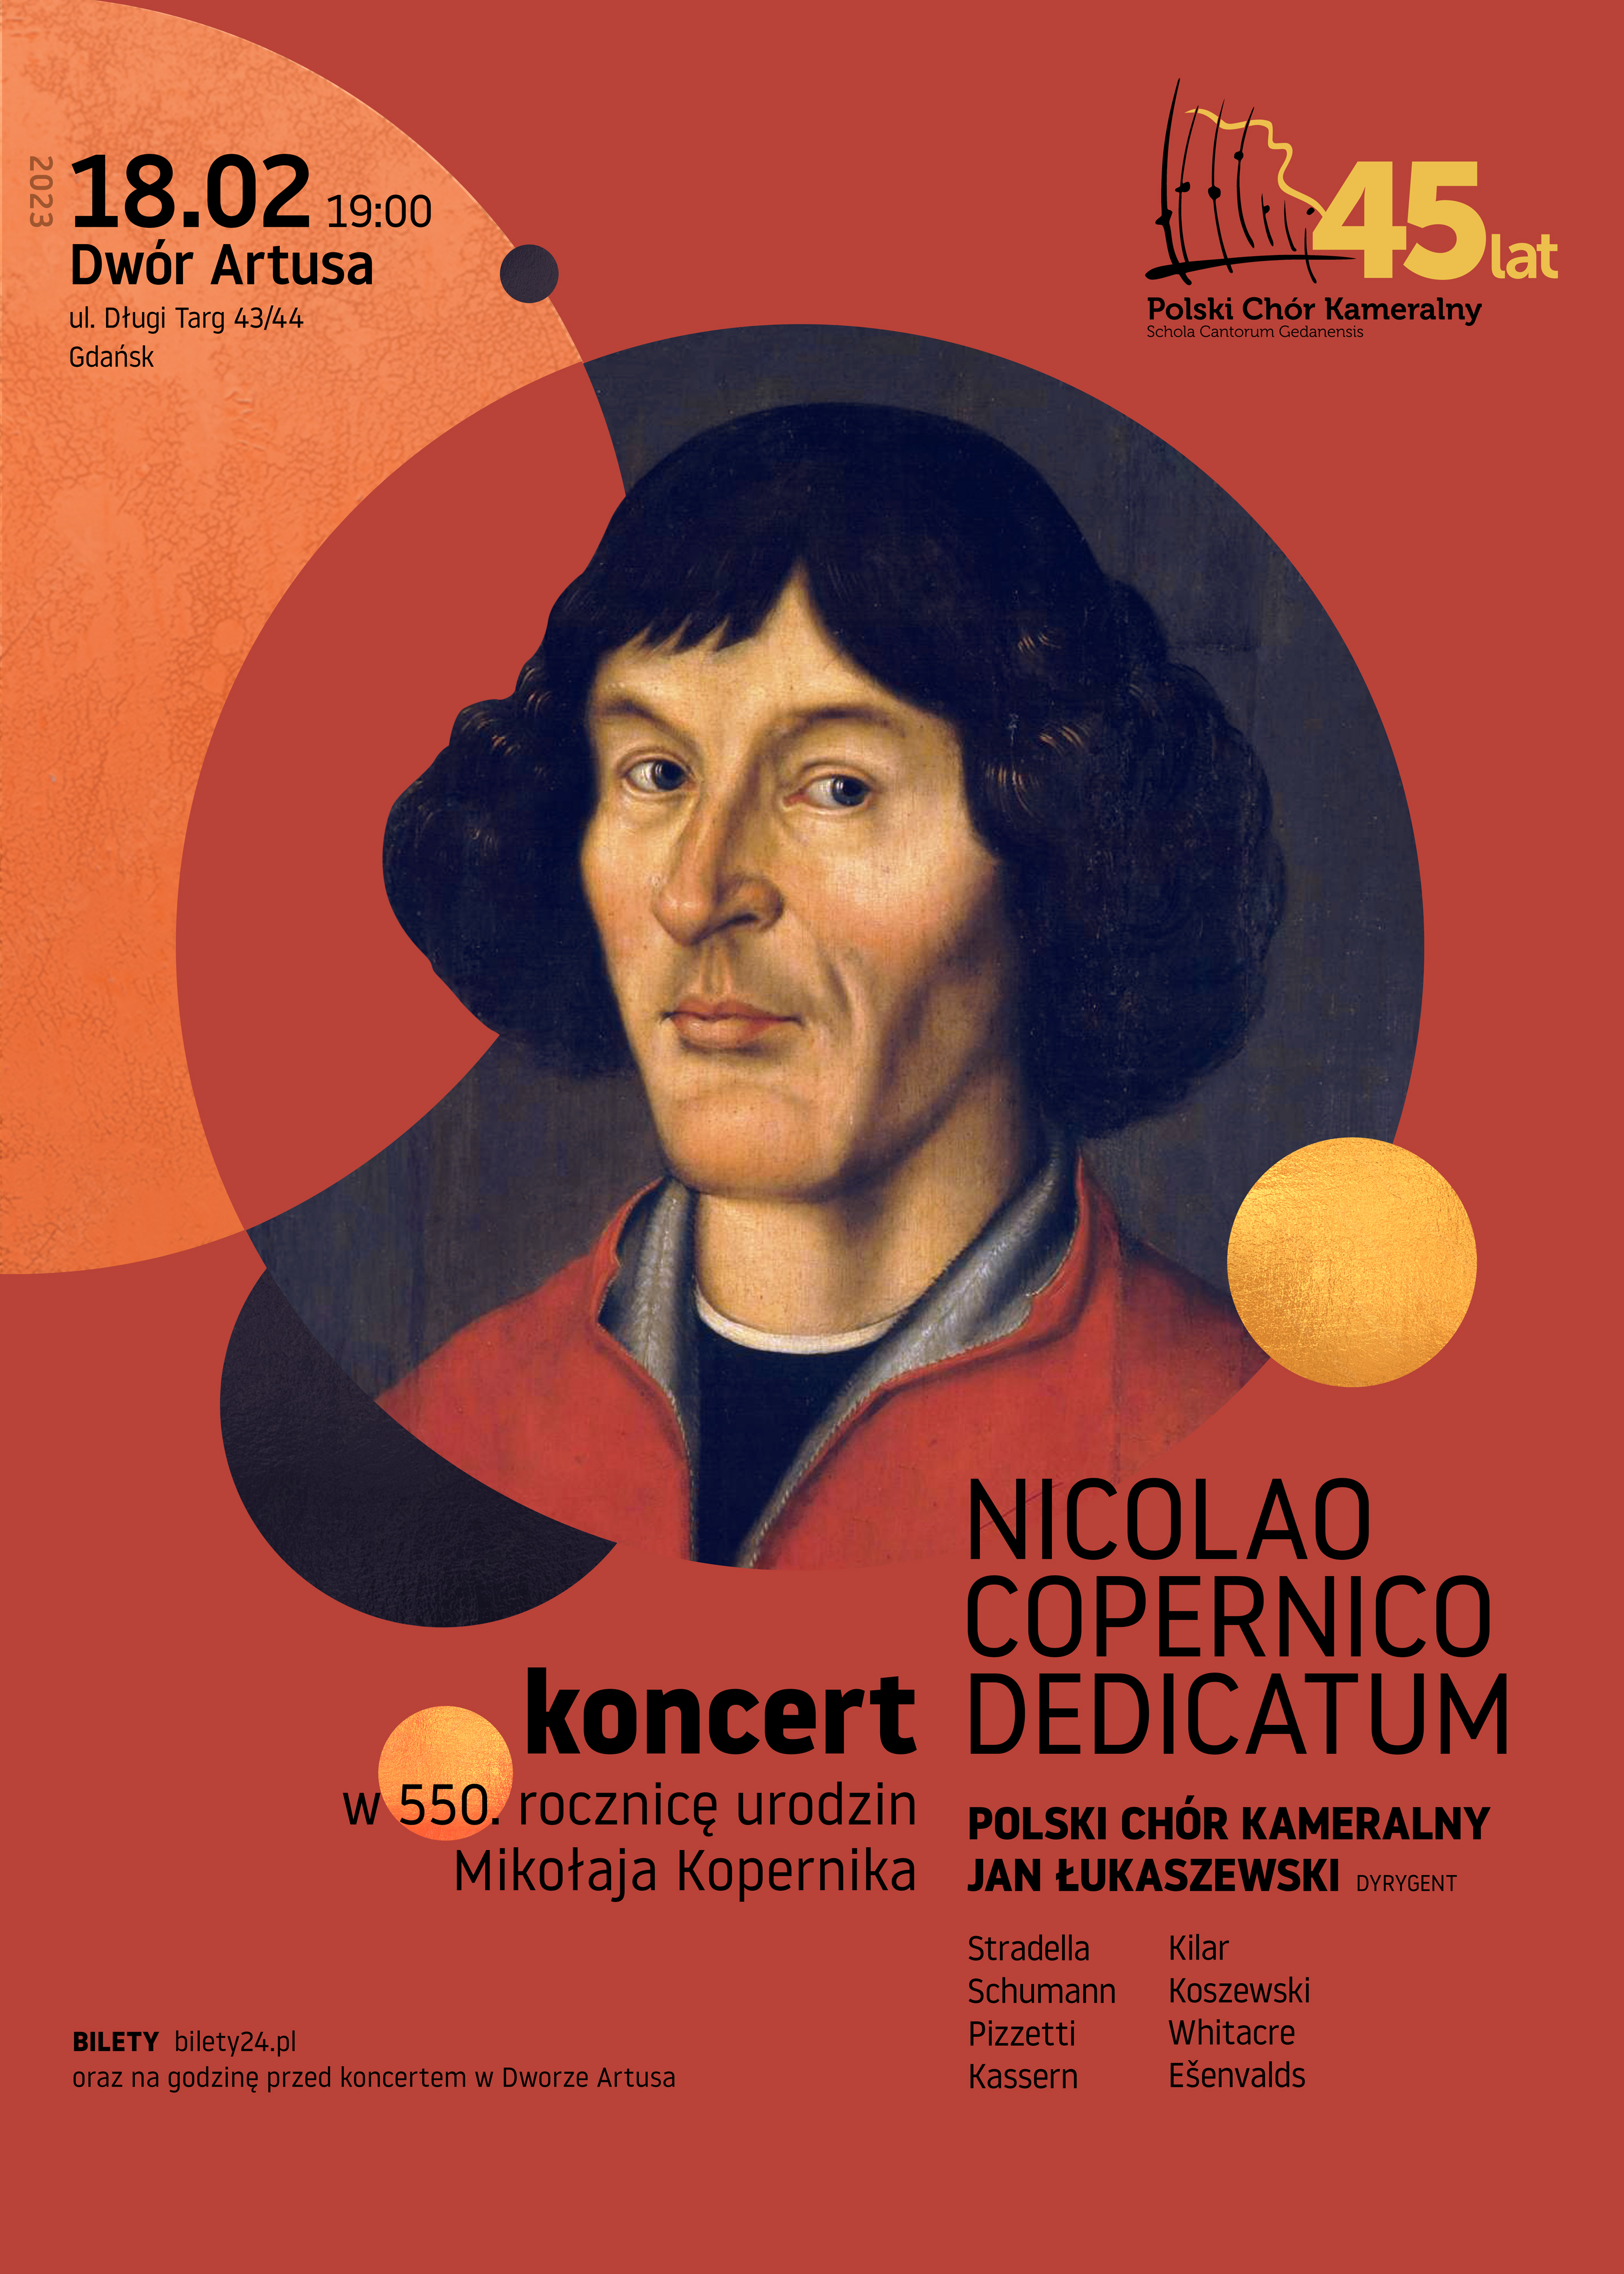 NICOLAO COPERNICO DEDICATUM Concert on the 550th Anniversary of the Birth of Nicolaus Copernicus